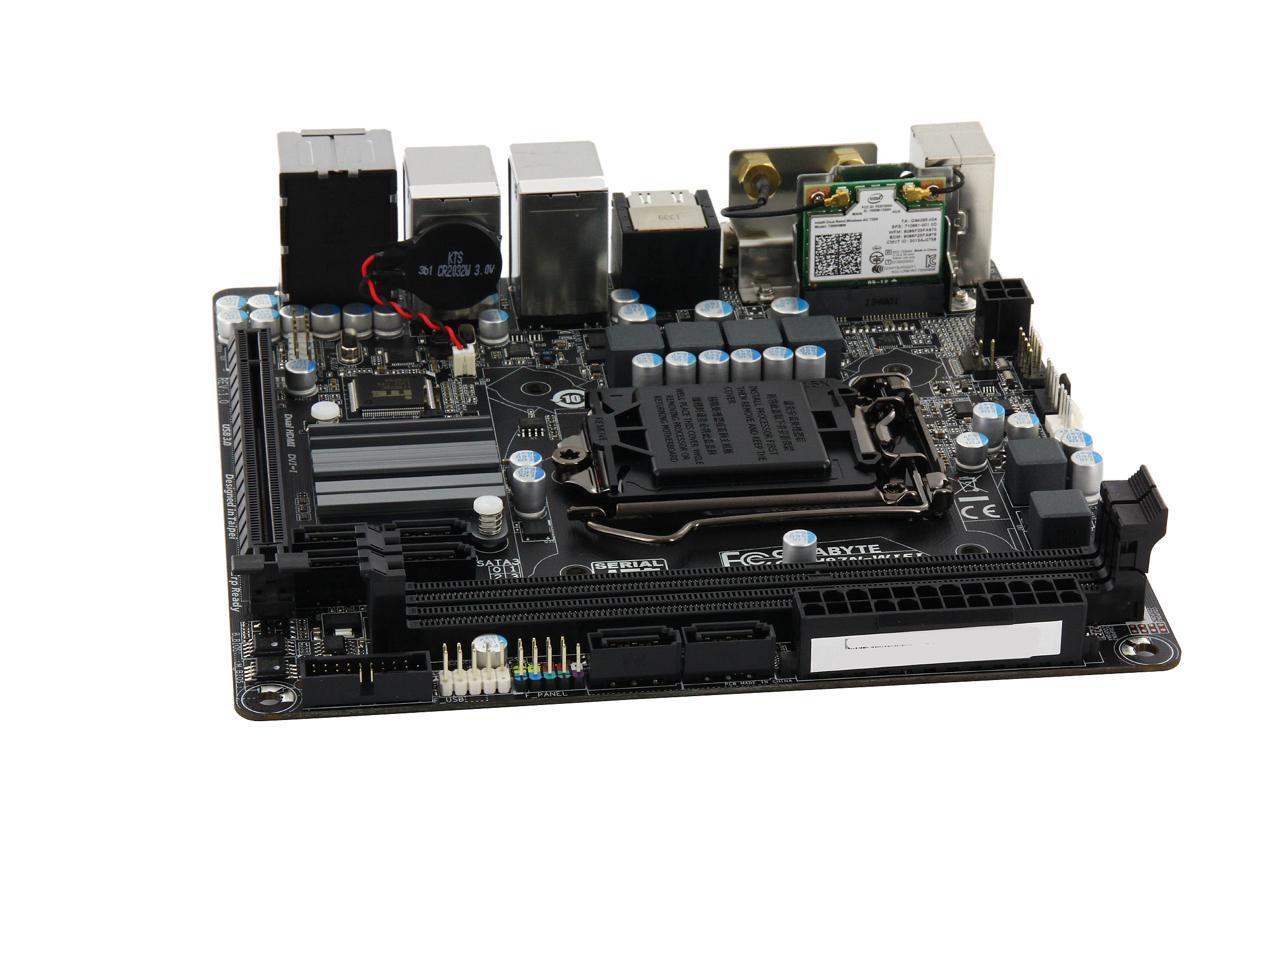 GIGABYTE GA-H97N-WIFI LGA 1150 Intel H97 HDMI SATA 6Gb/s USB 3.0 Mini ITX  Intel Motherboard